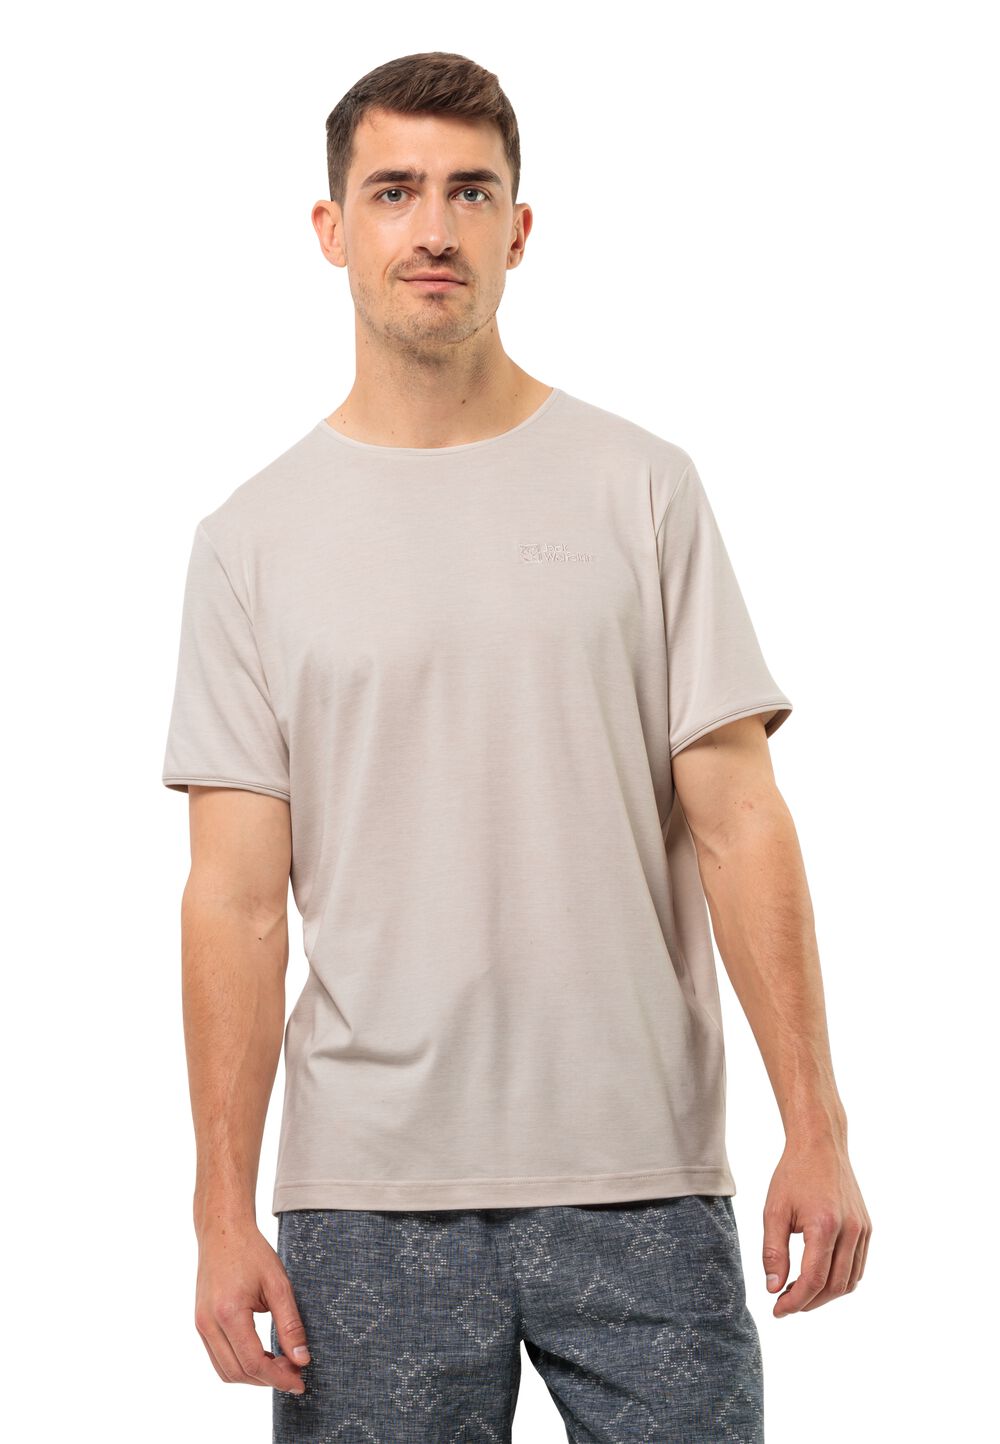 Jack Wolfskin Travel T-Shirt Men Functioneel shirt Heren XXL sea shell sea shell